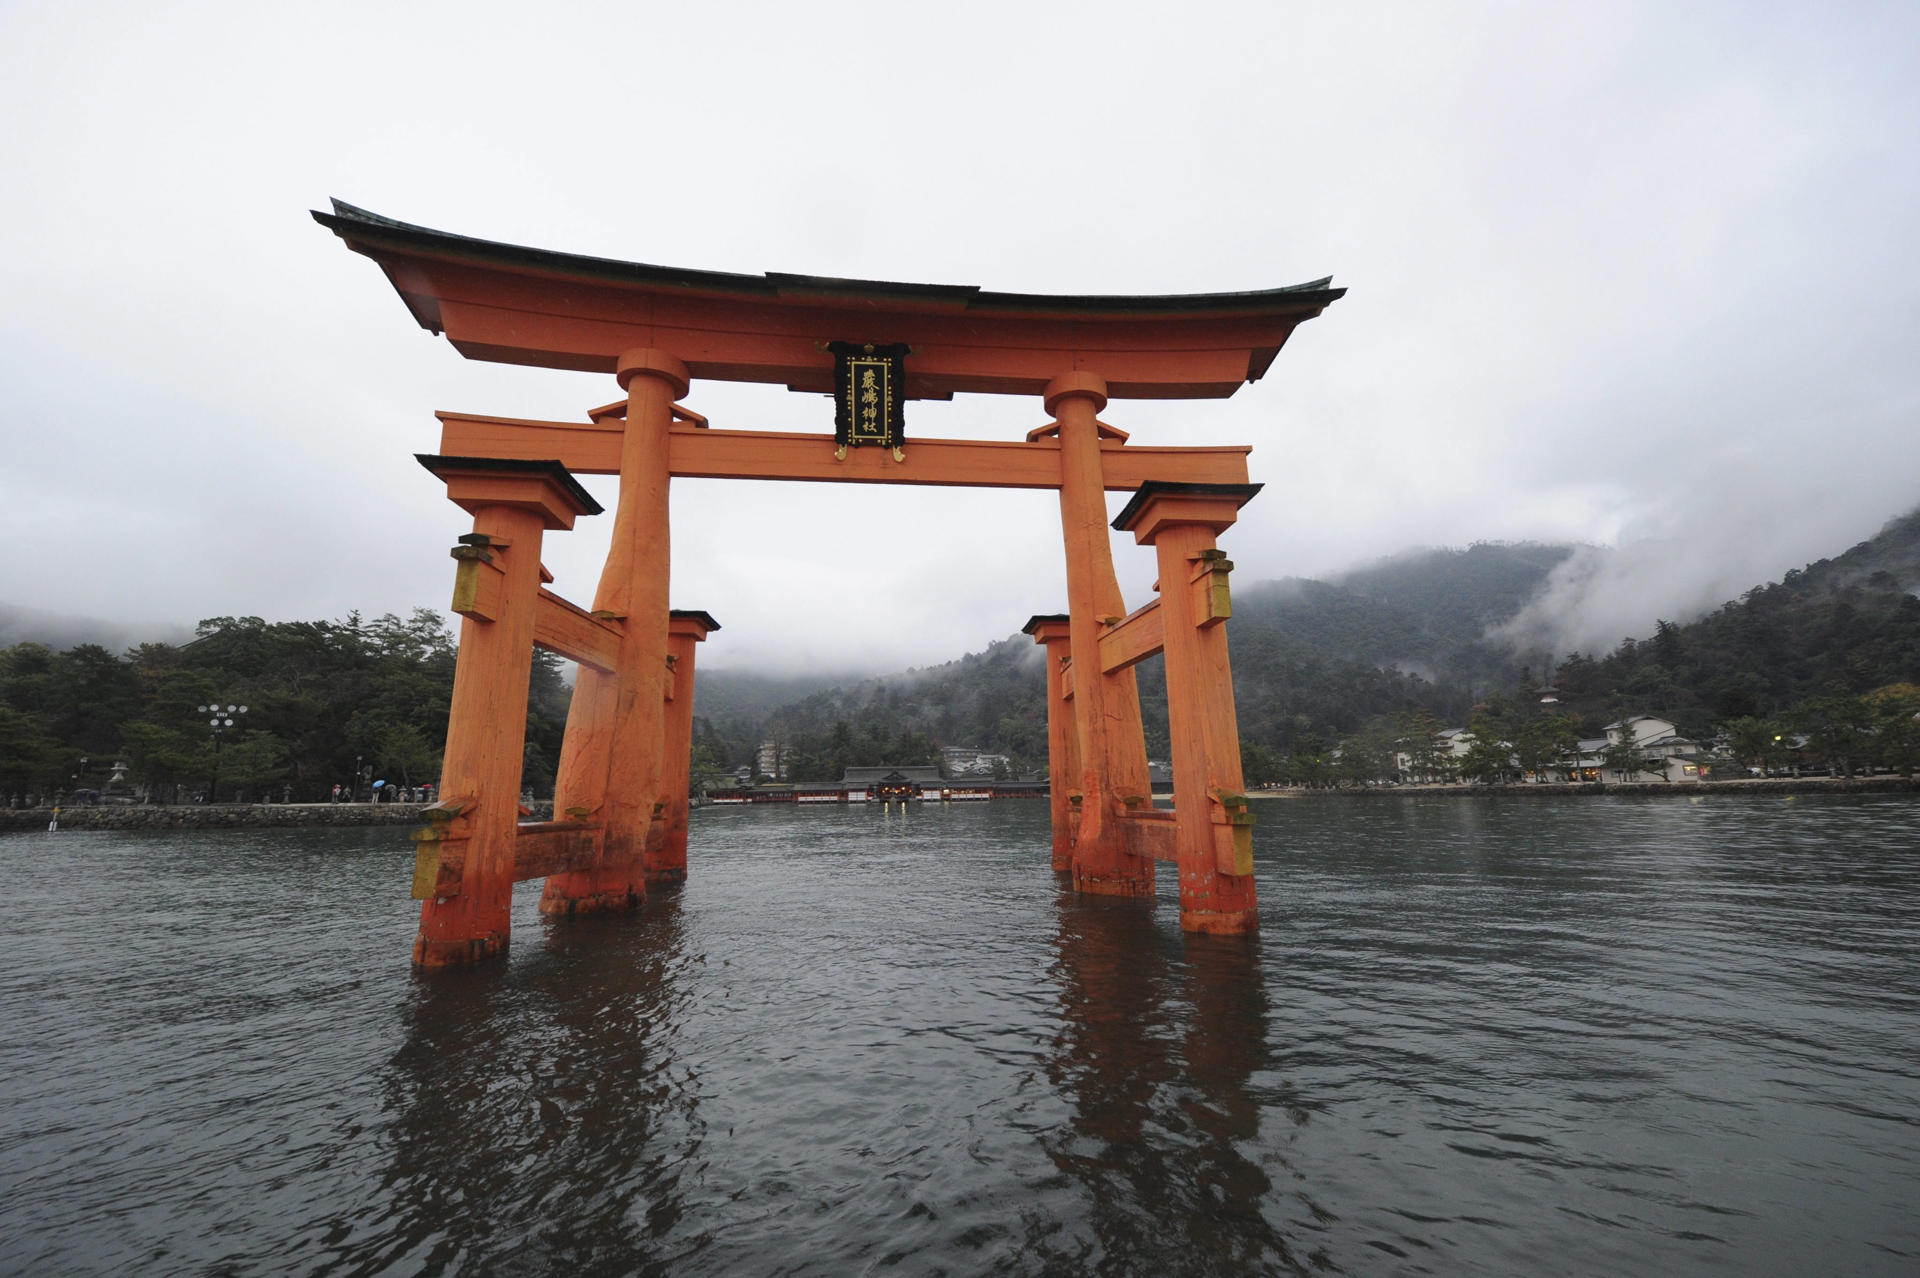 A photo released 02 December 2014 shows the 16.8 meter high shrine gate at Itsukushima Shinto Shrine, on Miyajima island, in Hatsukaichi city, Hiroshima prefecture, Japan, 30 November 2014. EPA/EVERETT KENNEDY BROWN/FILE